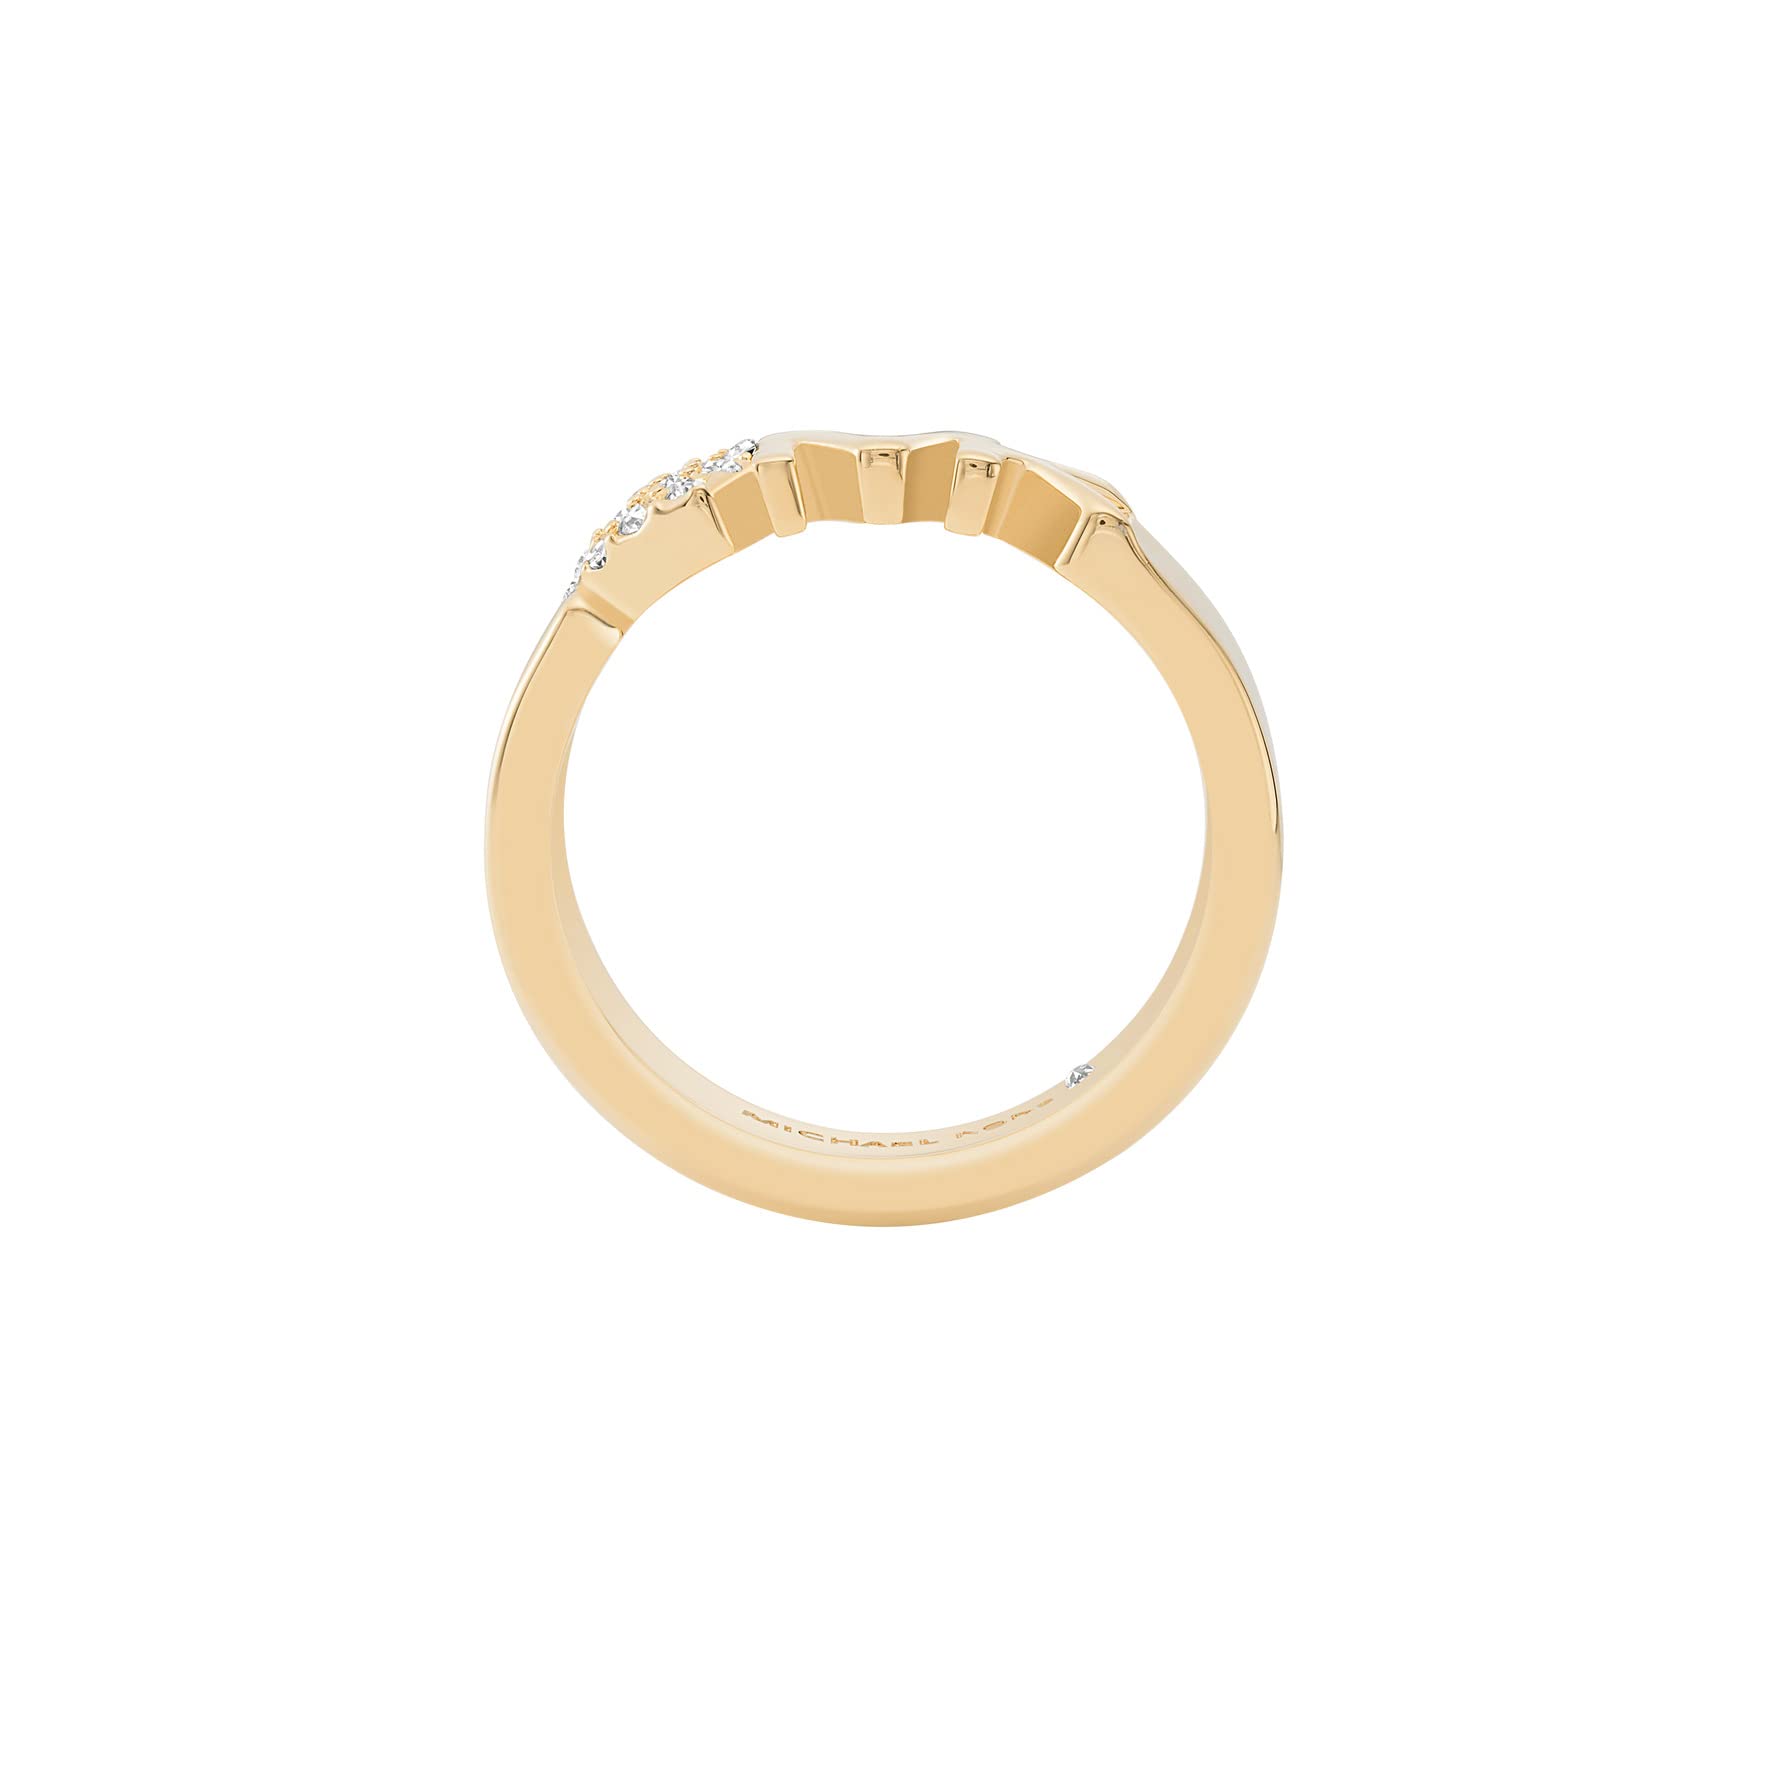 Mua Michael Kors Women's Gold-Tone Brass Band Ring, Size 9 (Model:  MKJ7978710) trên Amazon Mỹ chính hãng 2023 | Giaonhan247